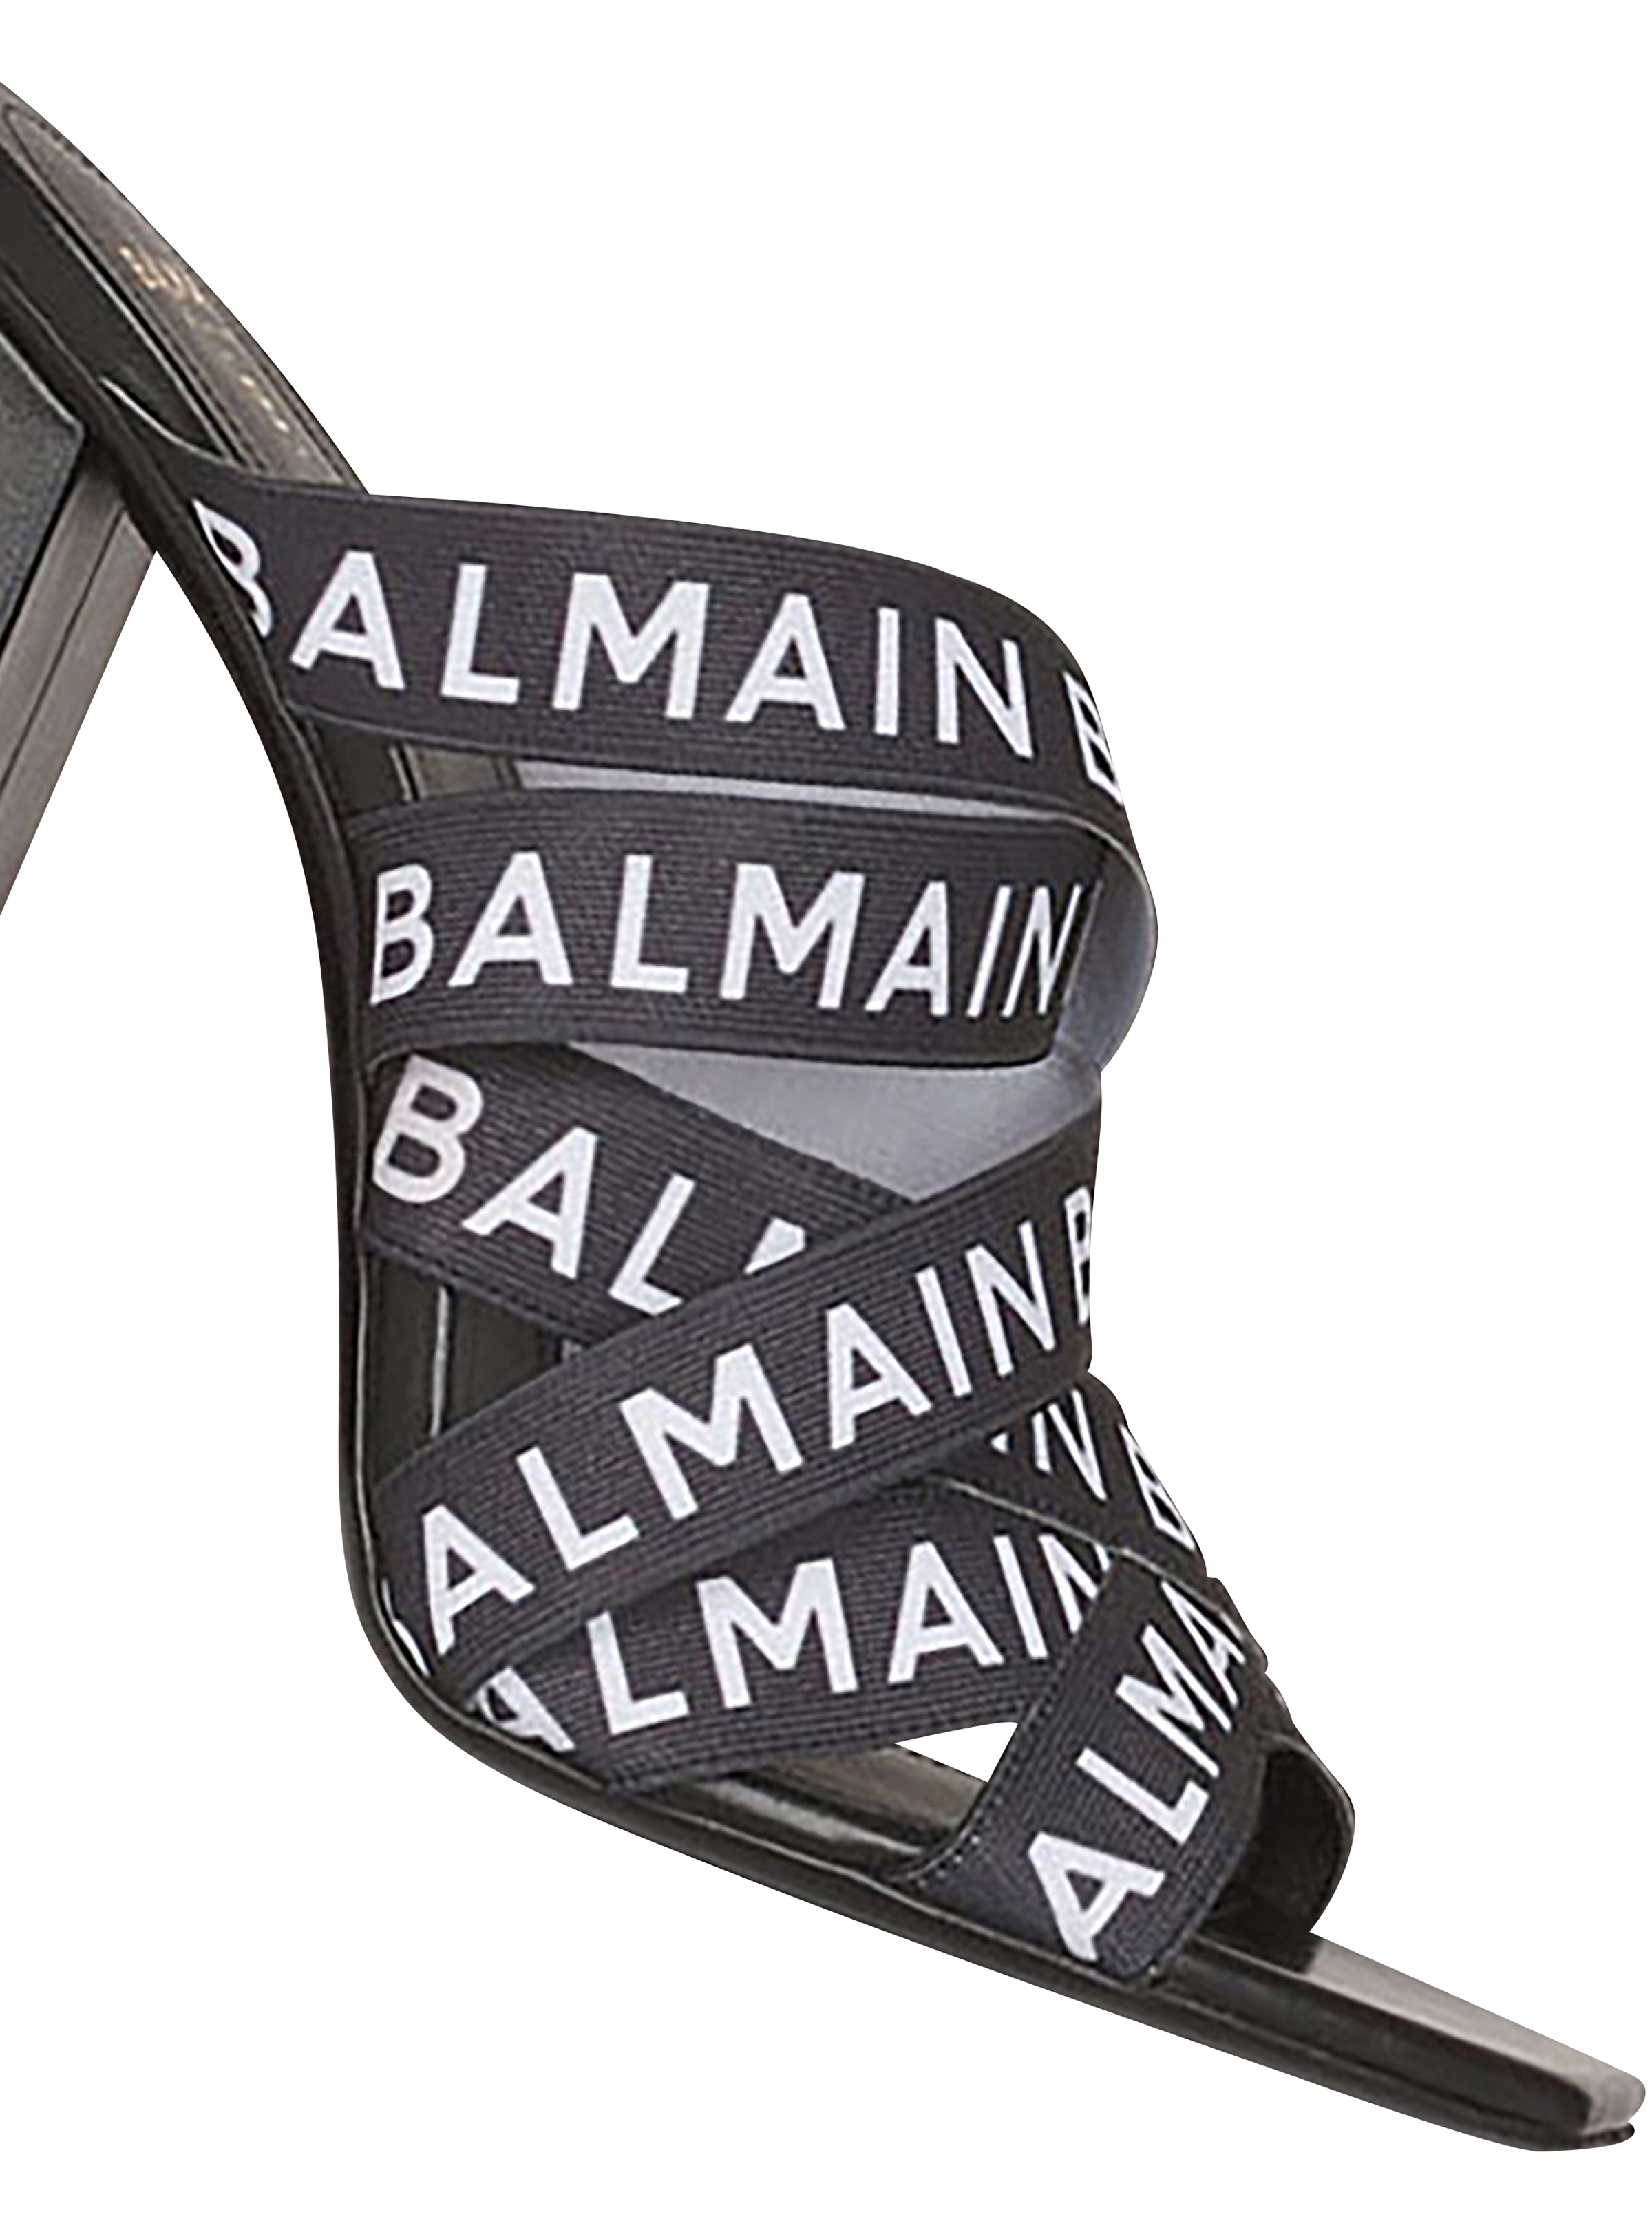 Union sandals with Balmain logo print - 5